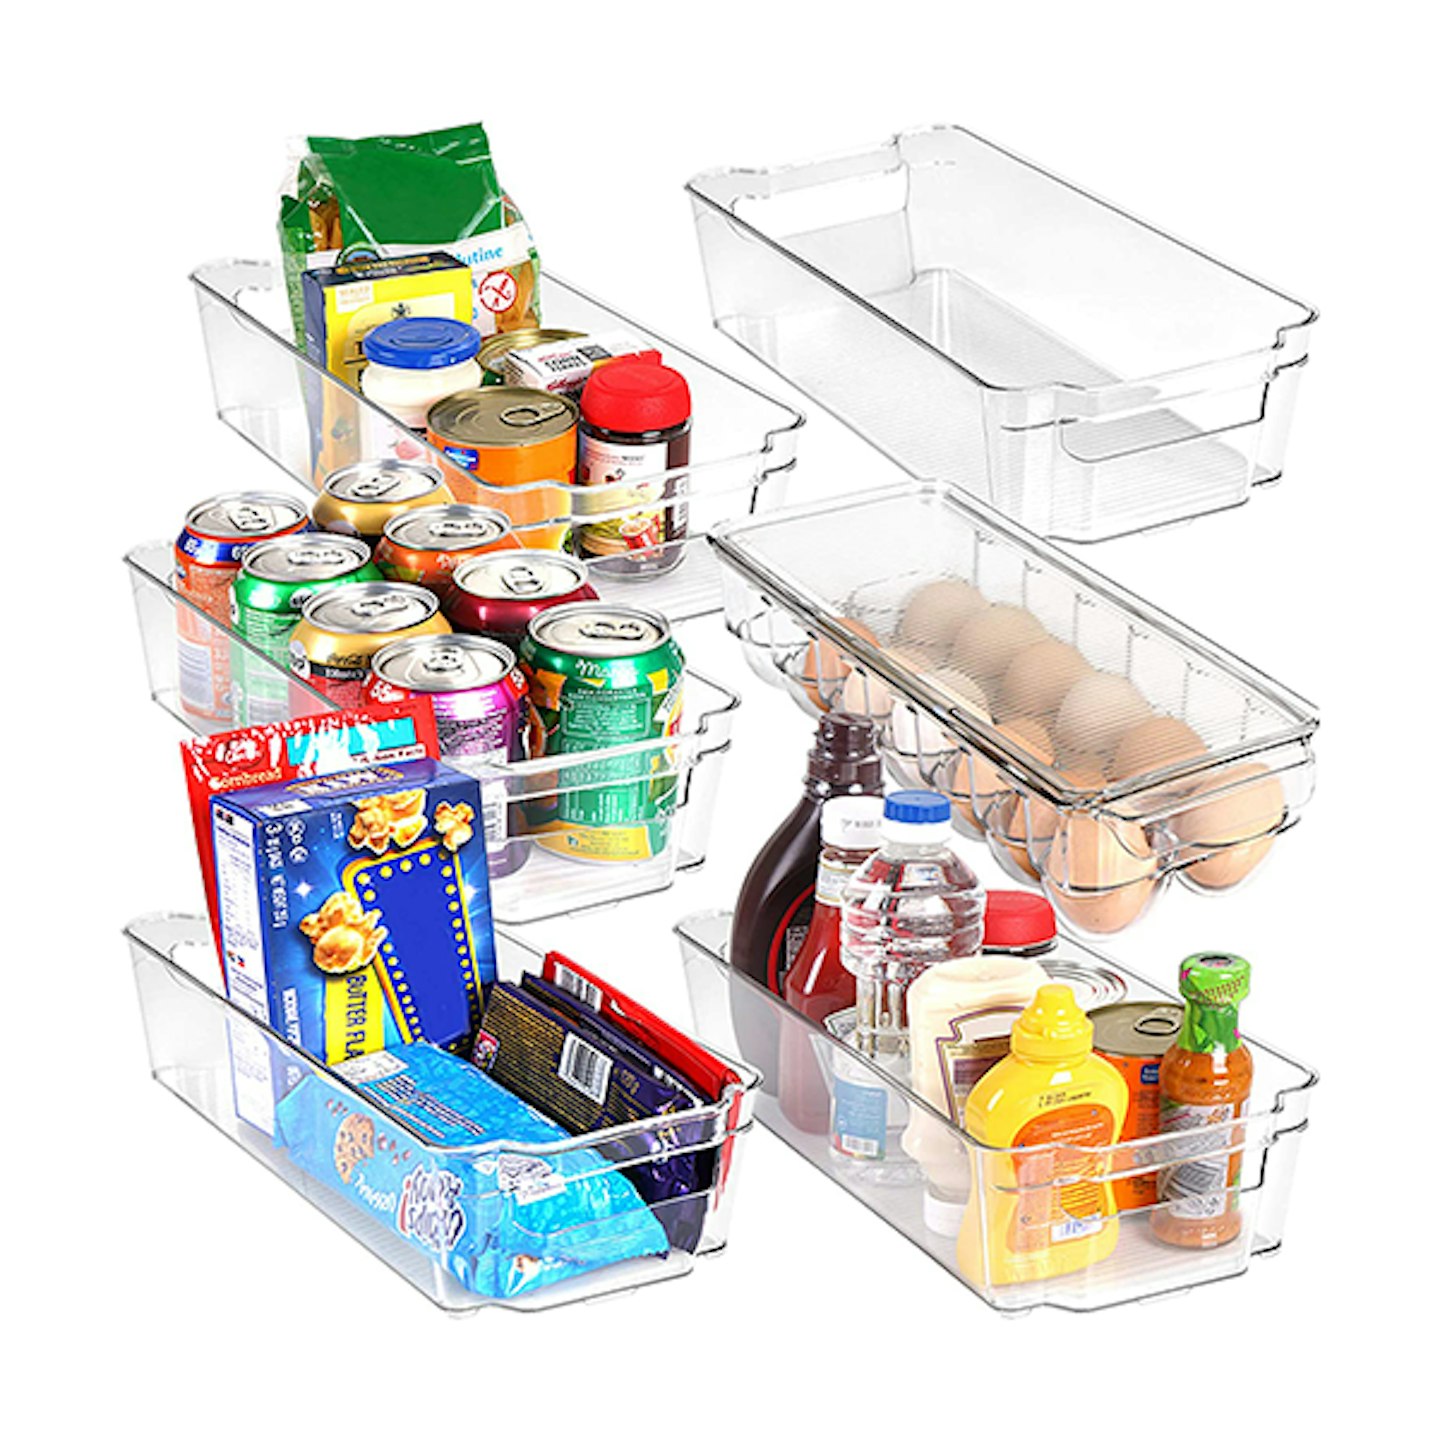 KICHLY Premium Refrigerator Storage Organizer Bins - Set of 6